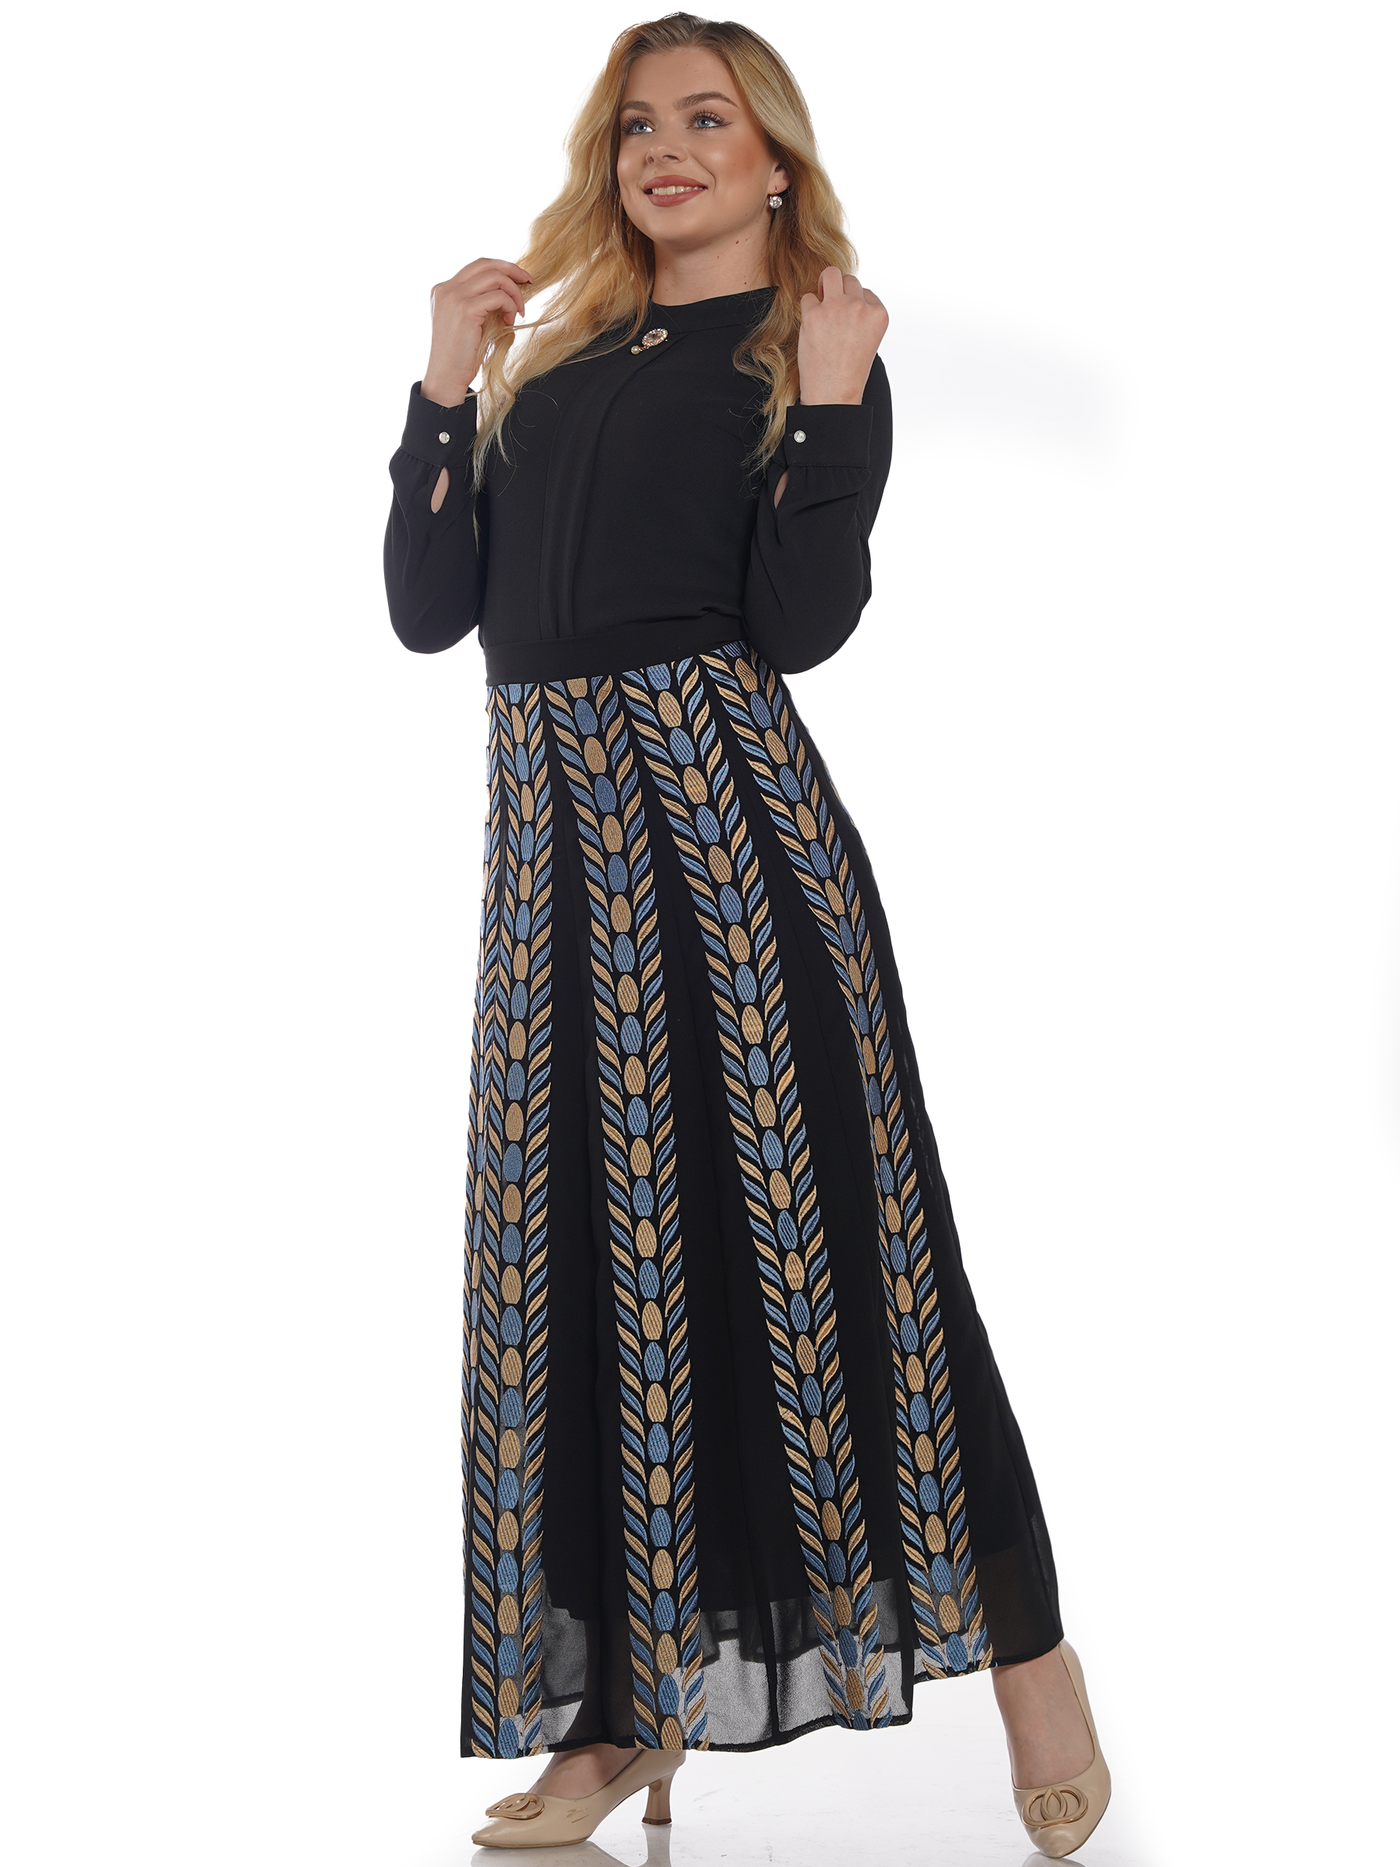 Embroidered skirt - High Quality Embroidered Skirt